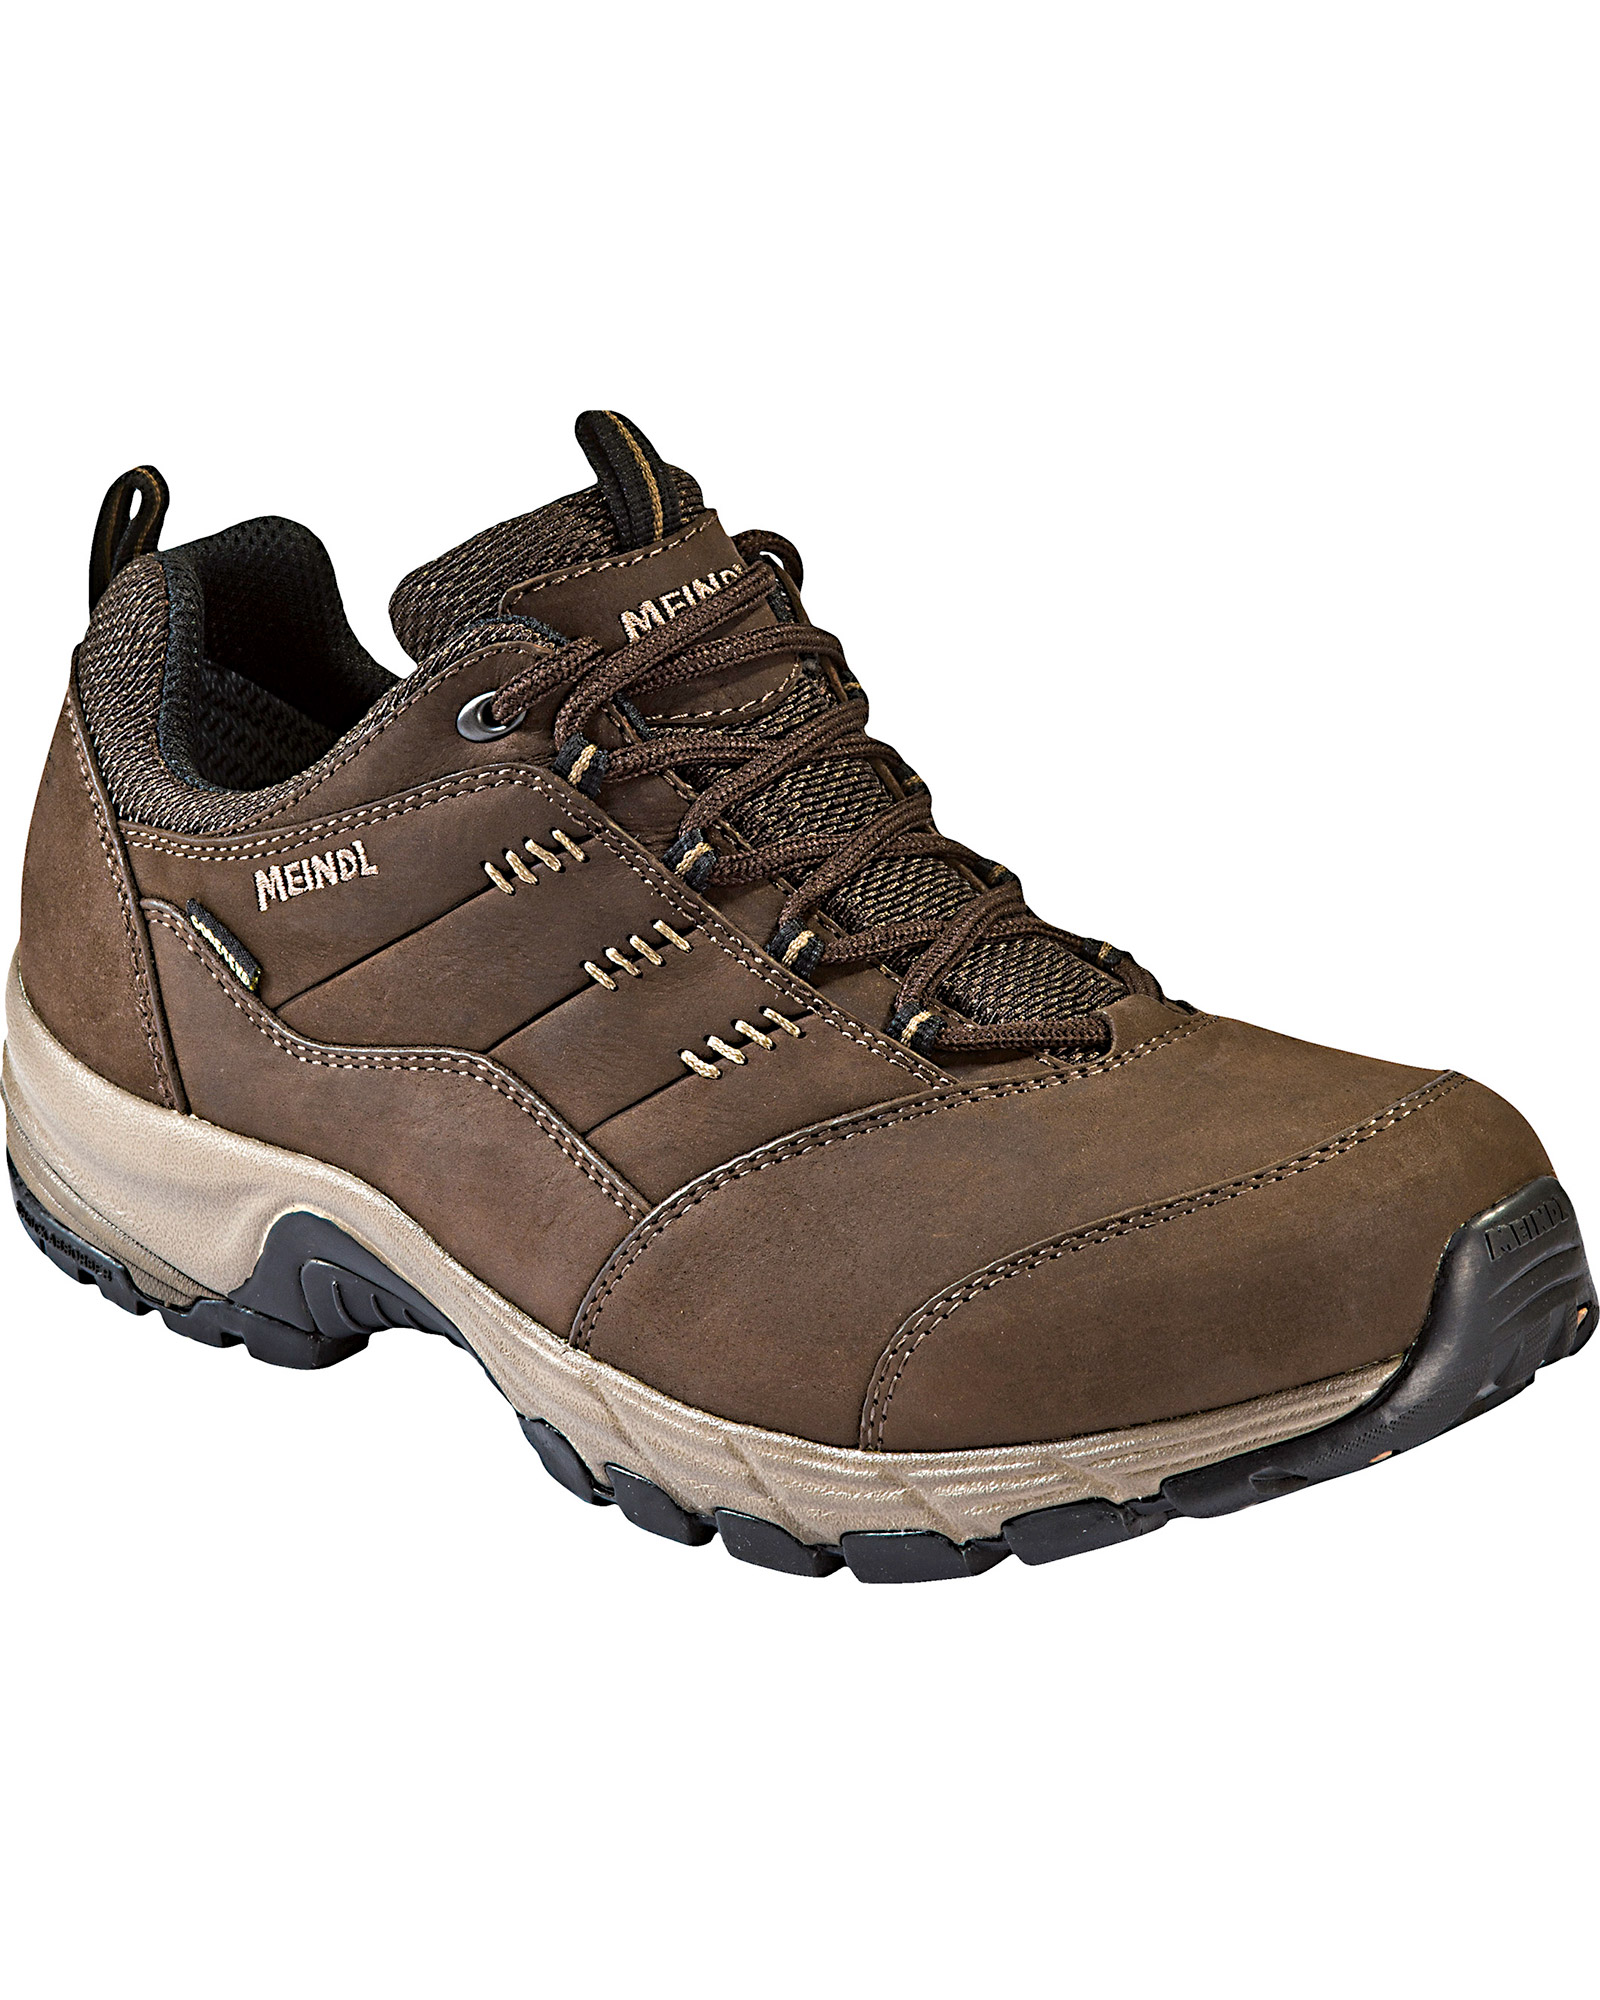 Meindl Philadelphia GORE TEX Men’s Shoes - Brown UK 11.5